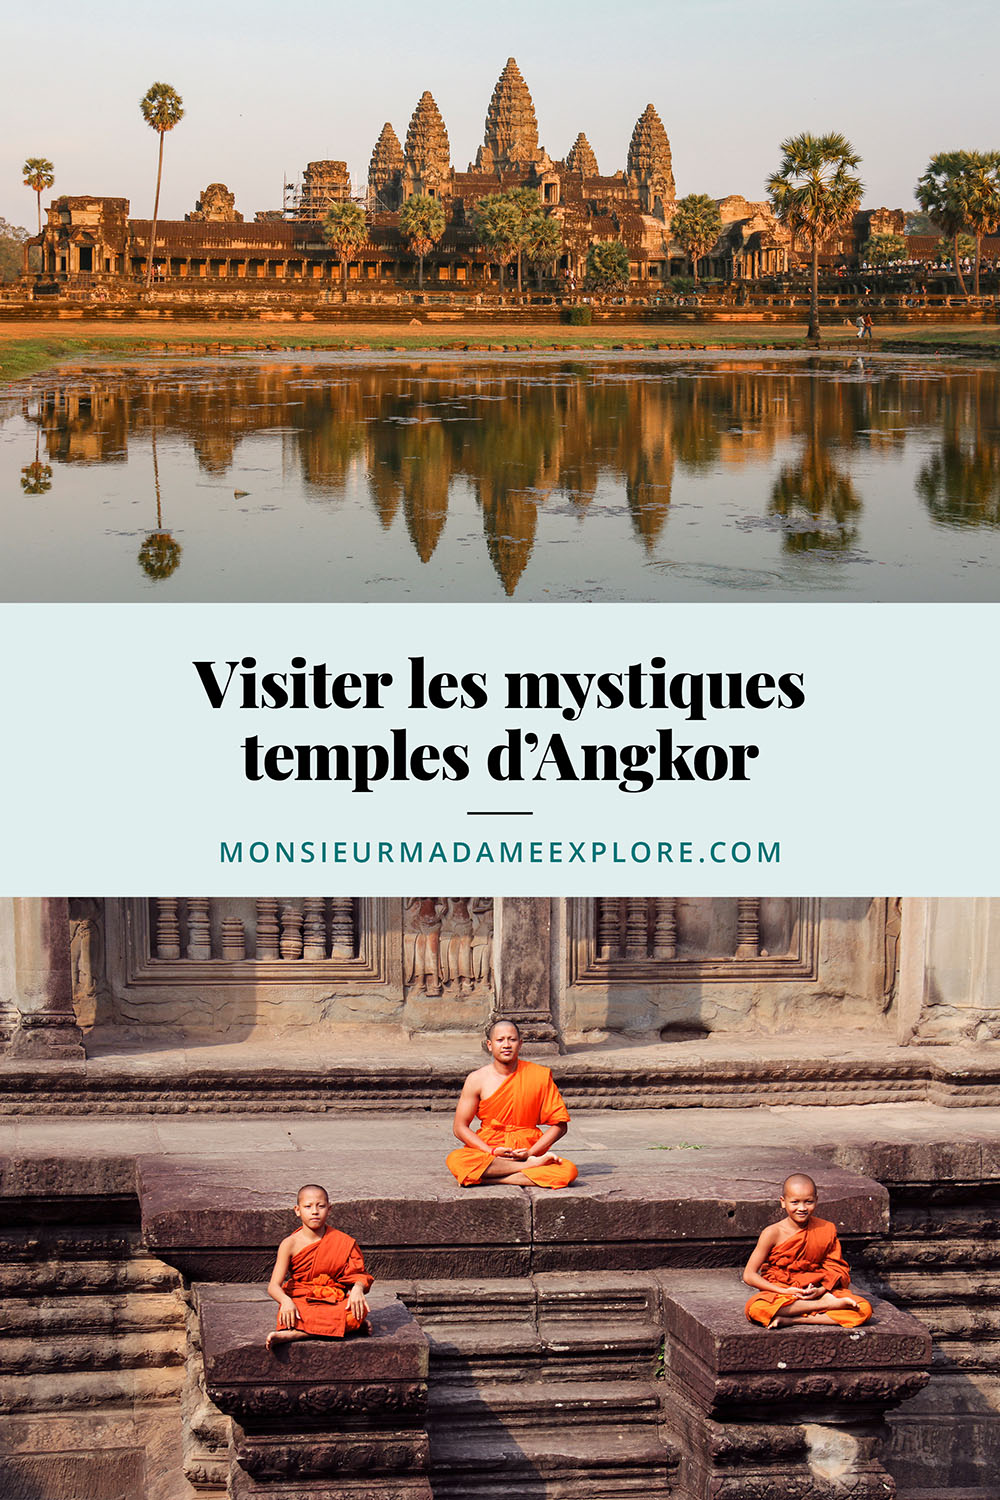 Visiter les mystiques temples d’Angkor, Monsieur+Madame Explore, Blogue de voyage, Cambodge / Visit the temples of Angkor, Cambodia